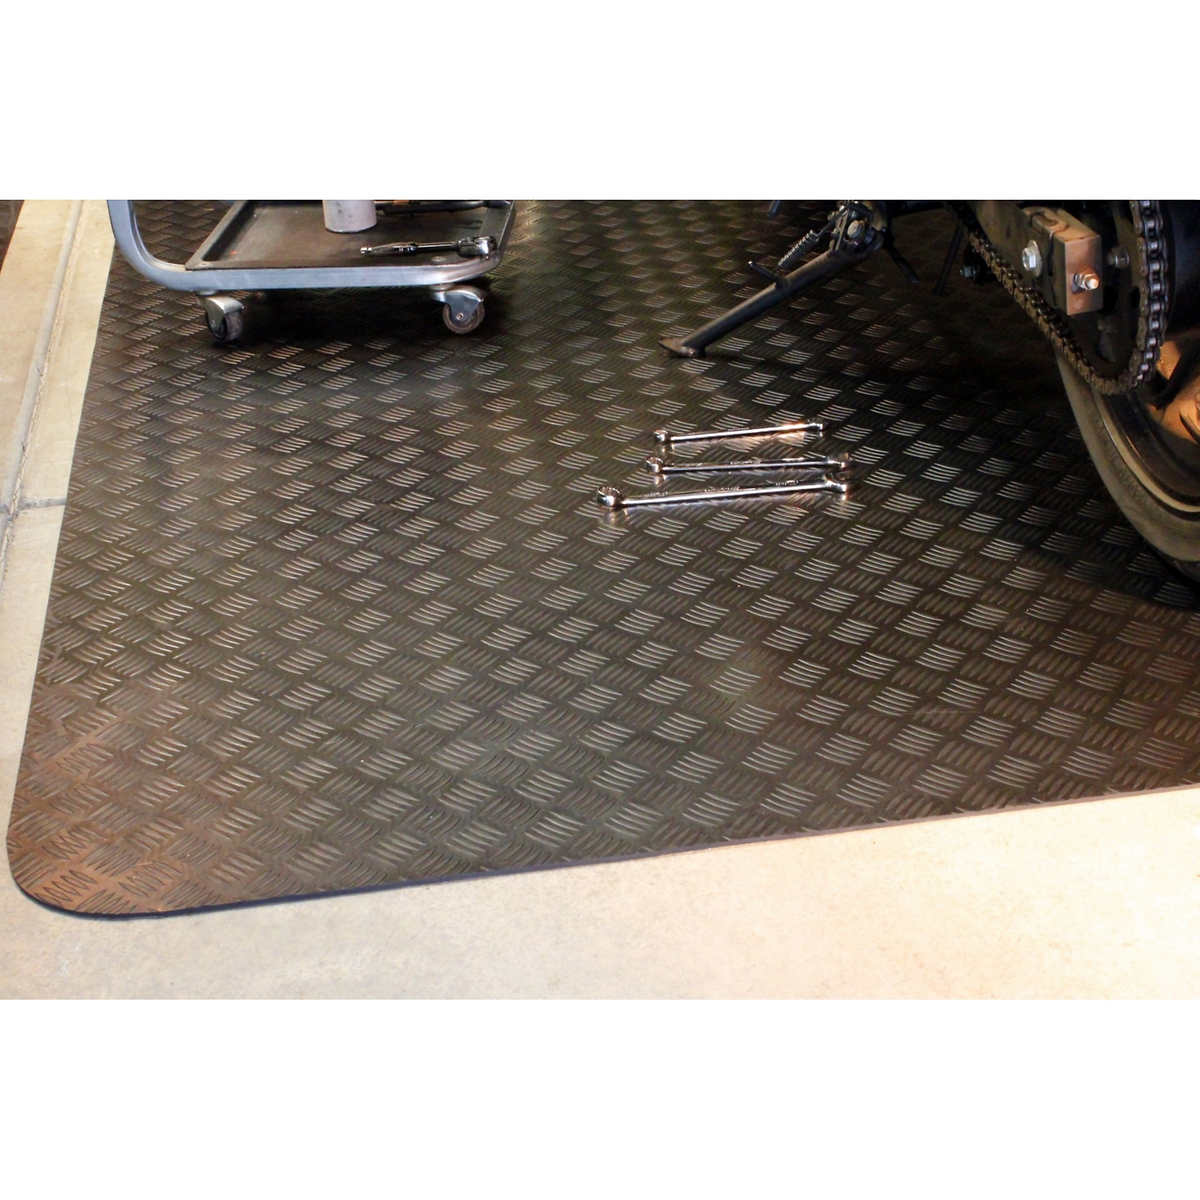 5 X 7 Coverguard Garage Floor Rubber Mat Ebay